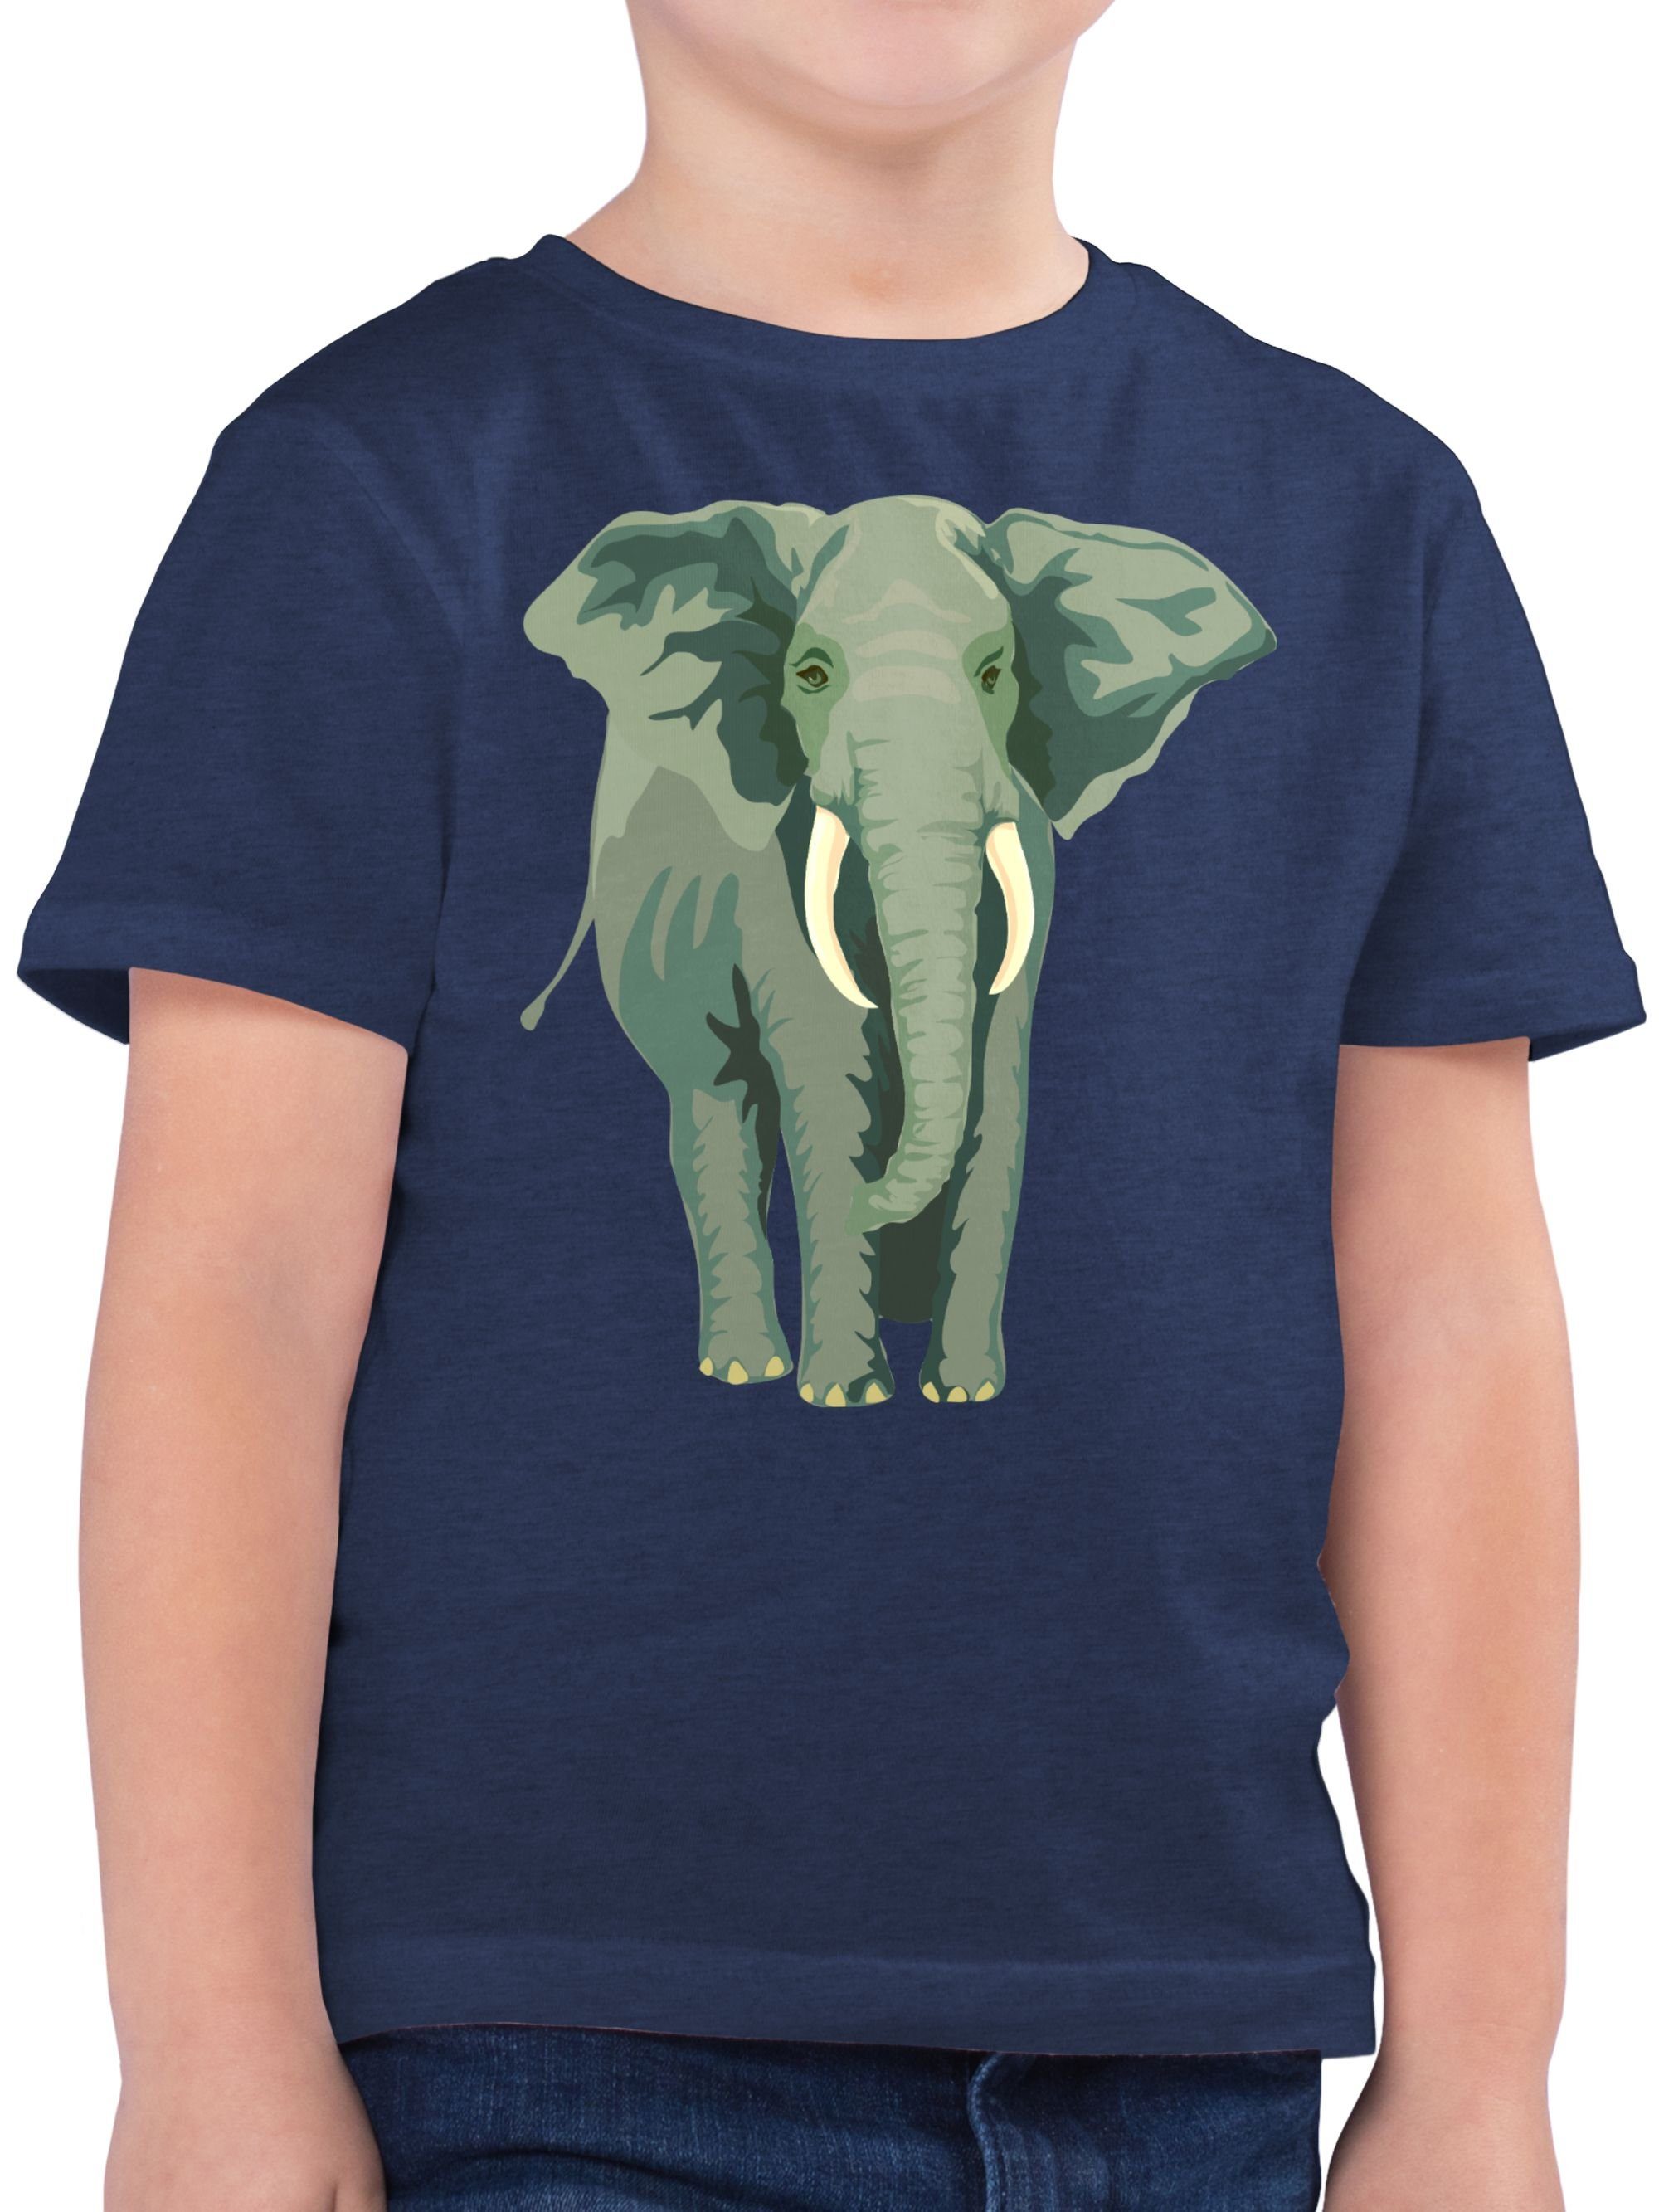 Shirtracer T-Shirt Elefant - Tiermotiv Animal Print - Jungen Kinder T-Shirt  t-shirt 128 jungen - tshirt elefant kinder - elefanten shirt